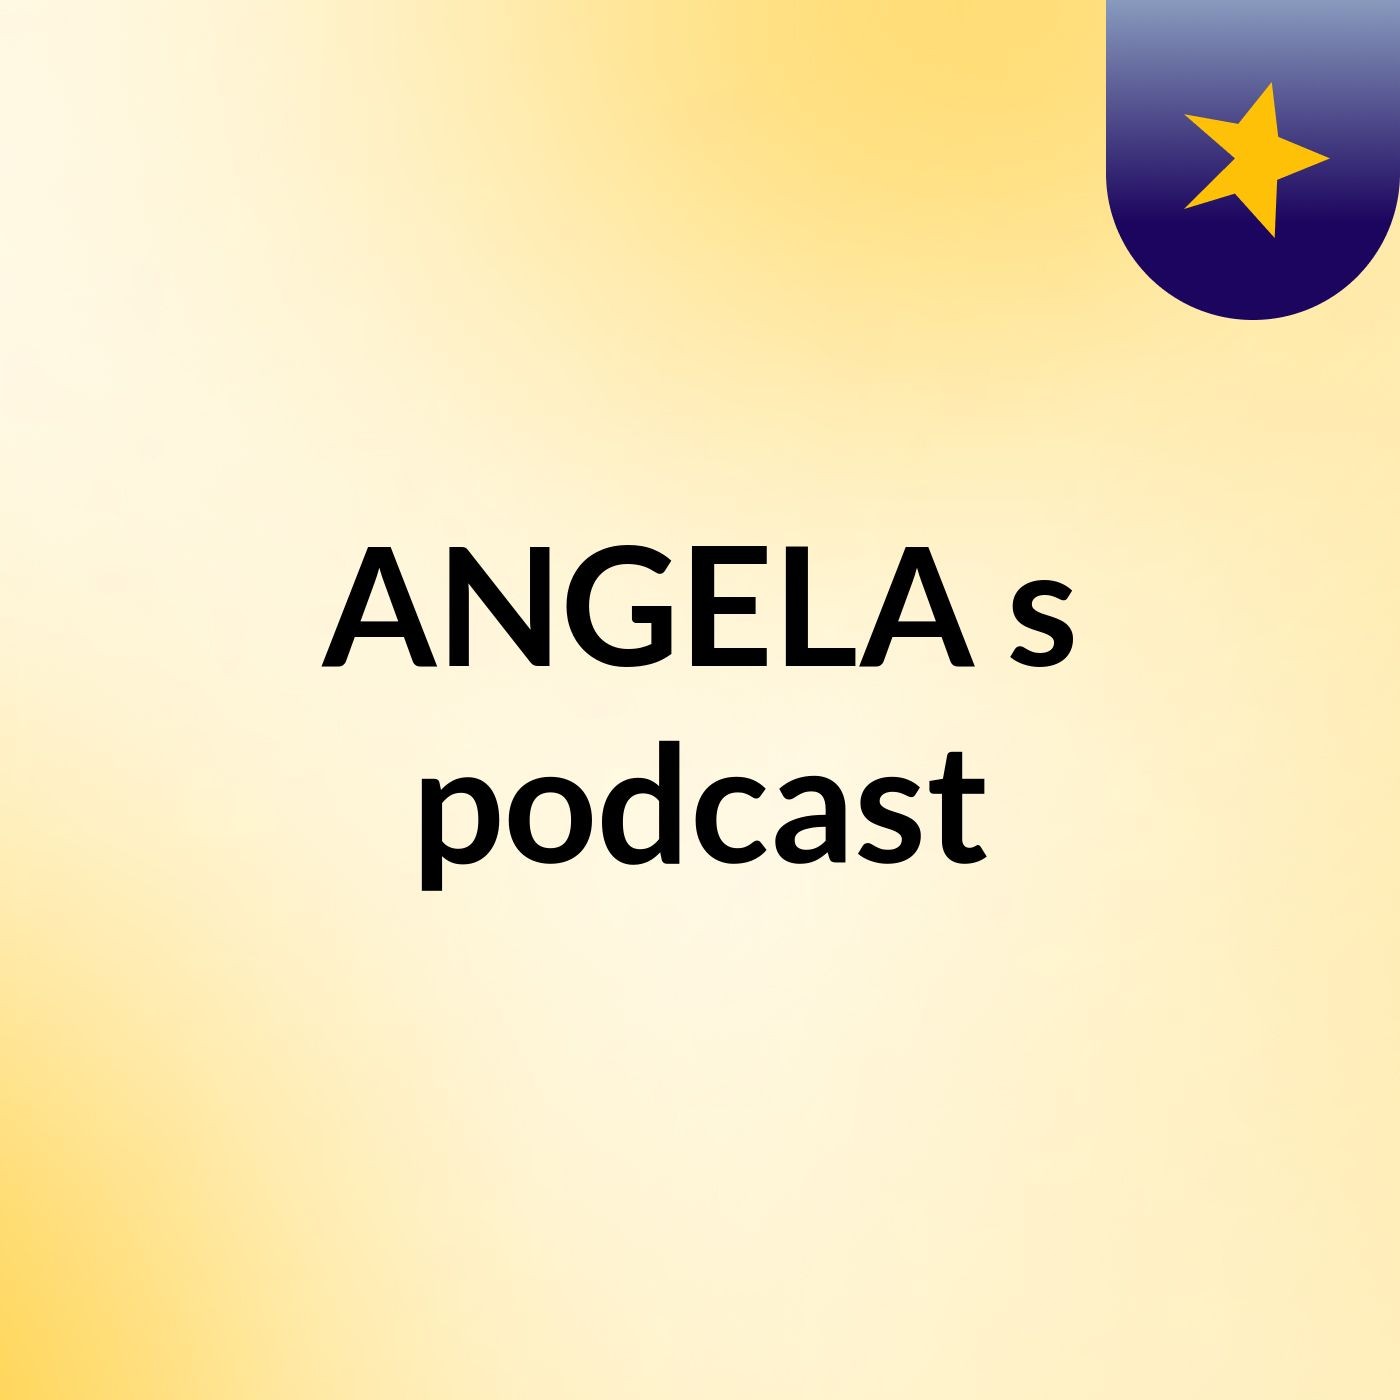 Episode 2 - ANGELA's podcast